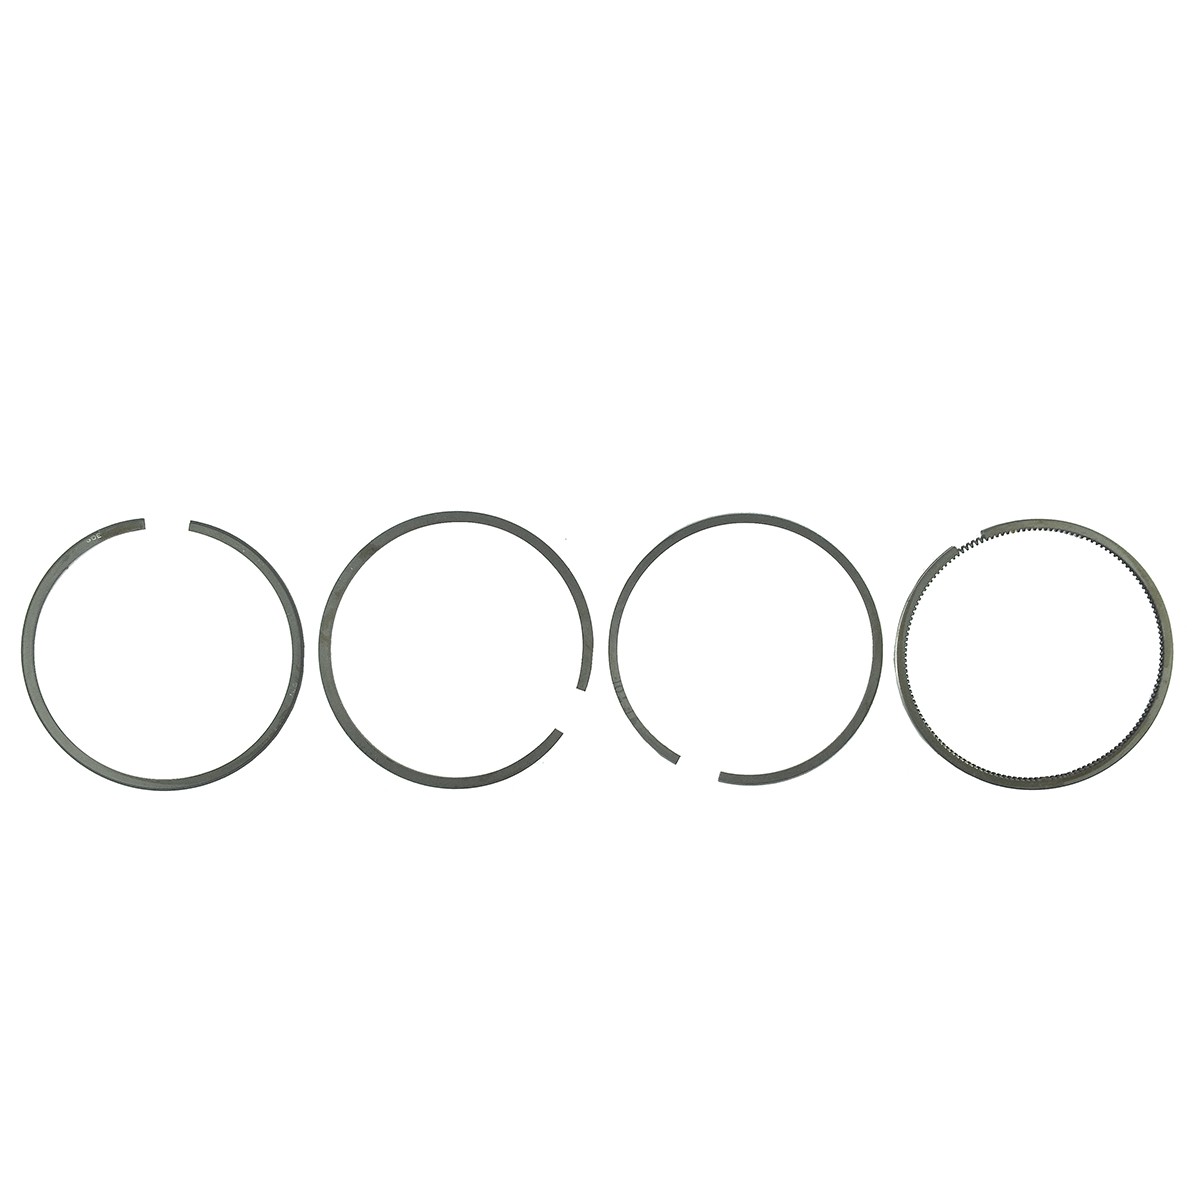 Pístní kroužky / Ø 70 mm / 2,50 x 2,50 x 2,50 x 4,00 mm / Mitsubishi C60/K2C/K3C/K4C / MM432982